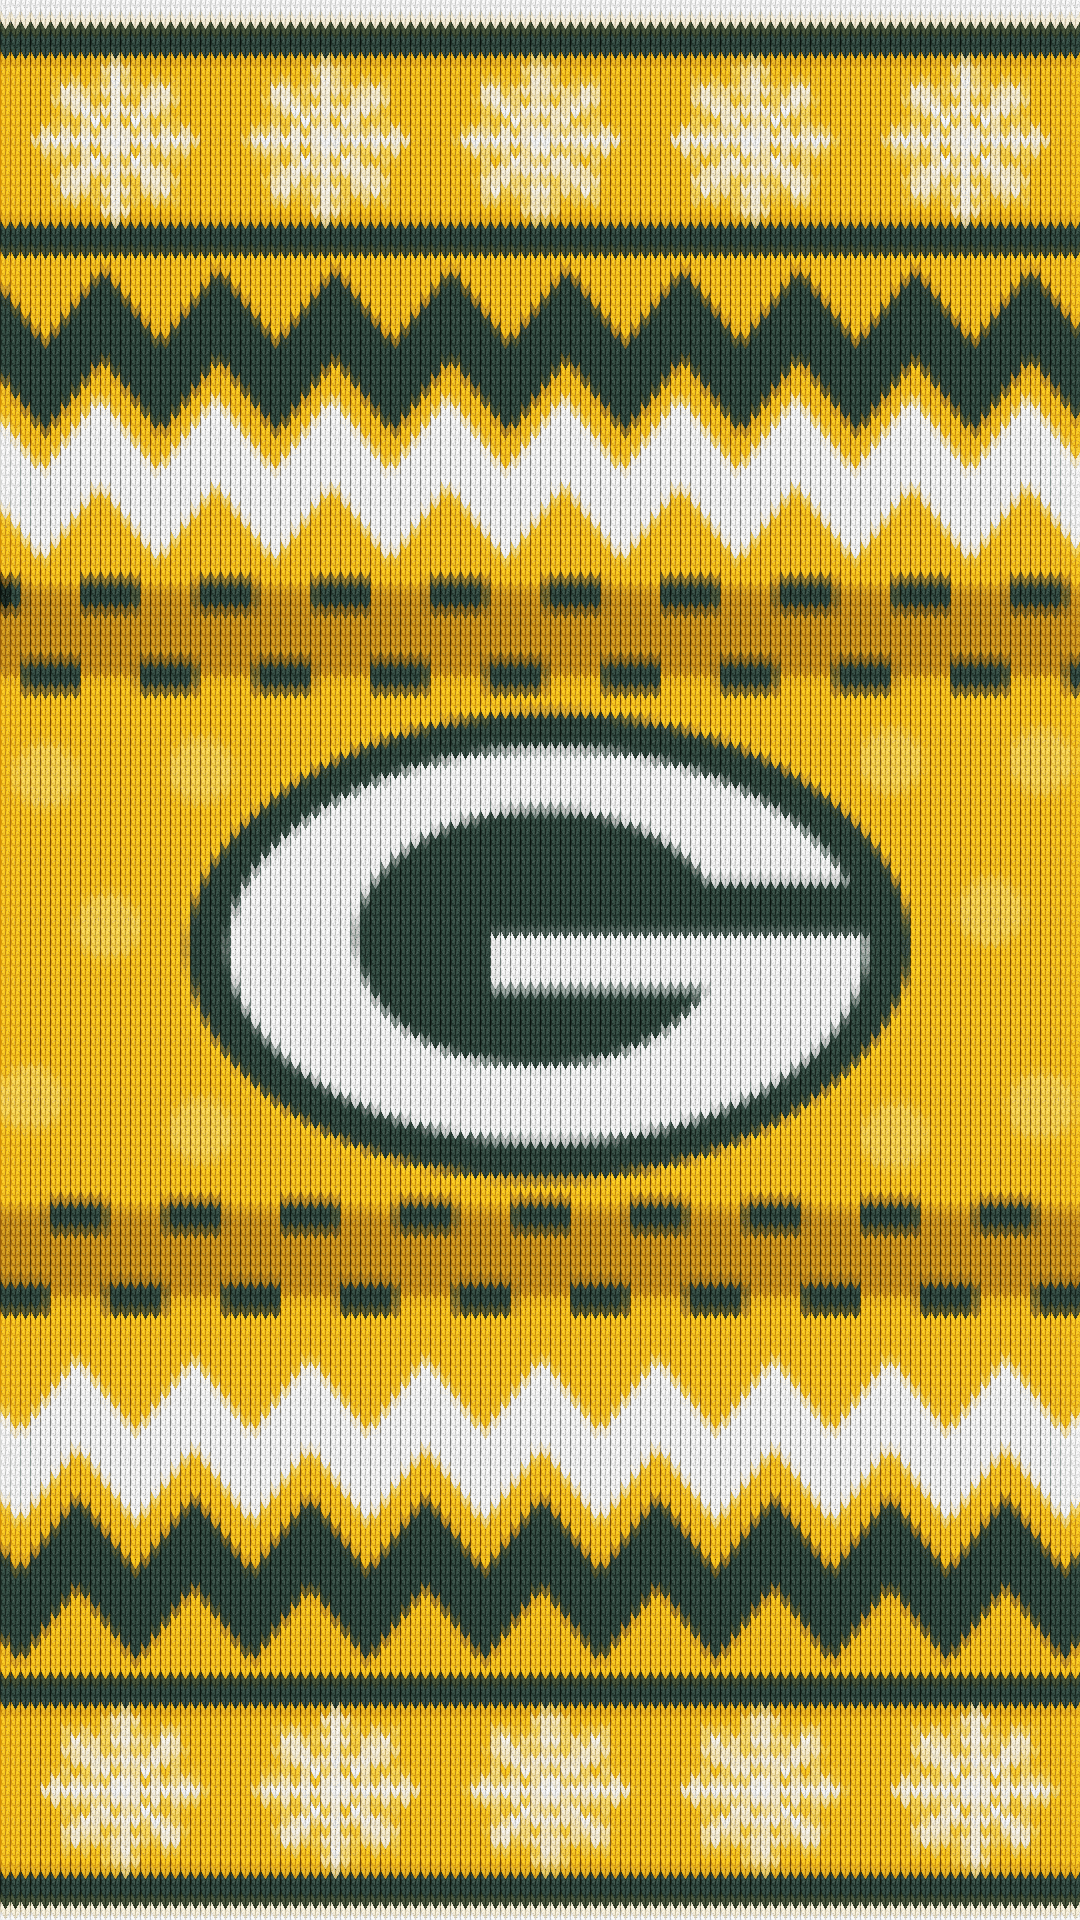 Green Bay Packers iPhone Xr Wallpaper